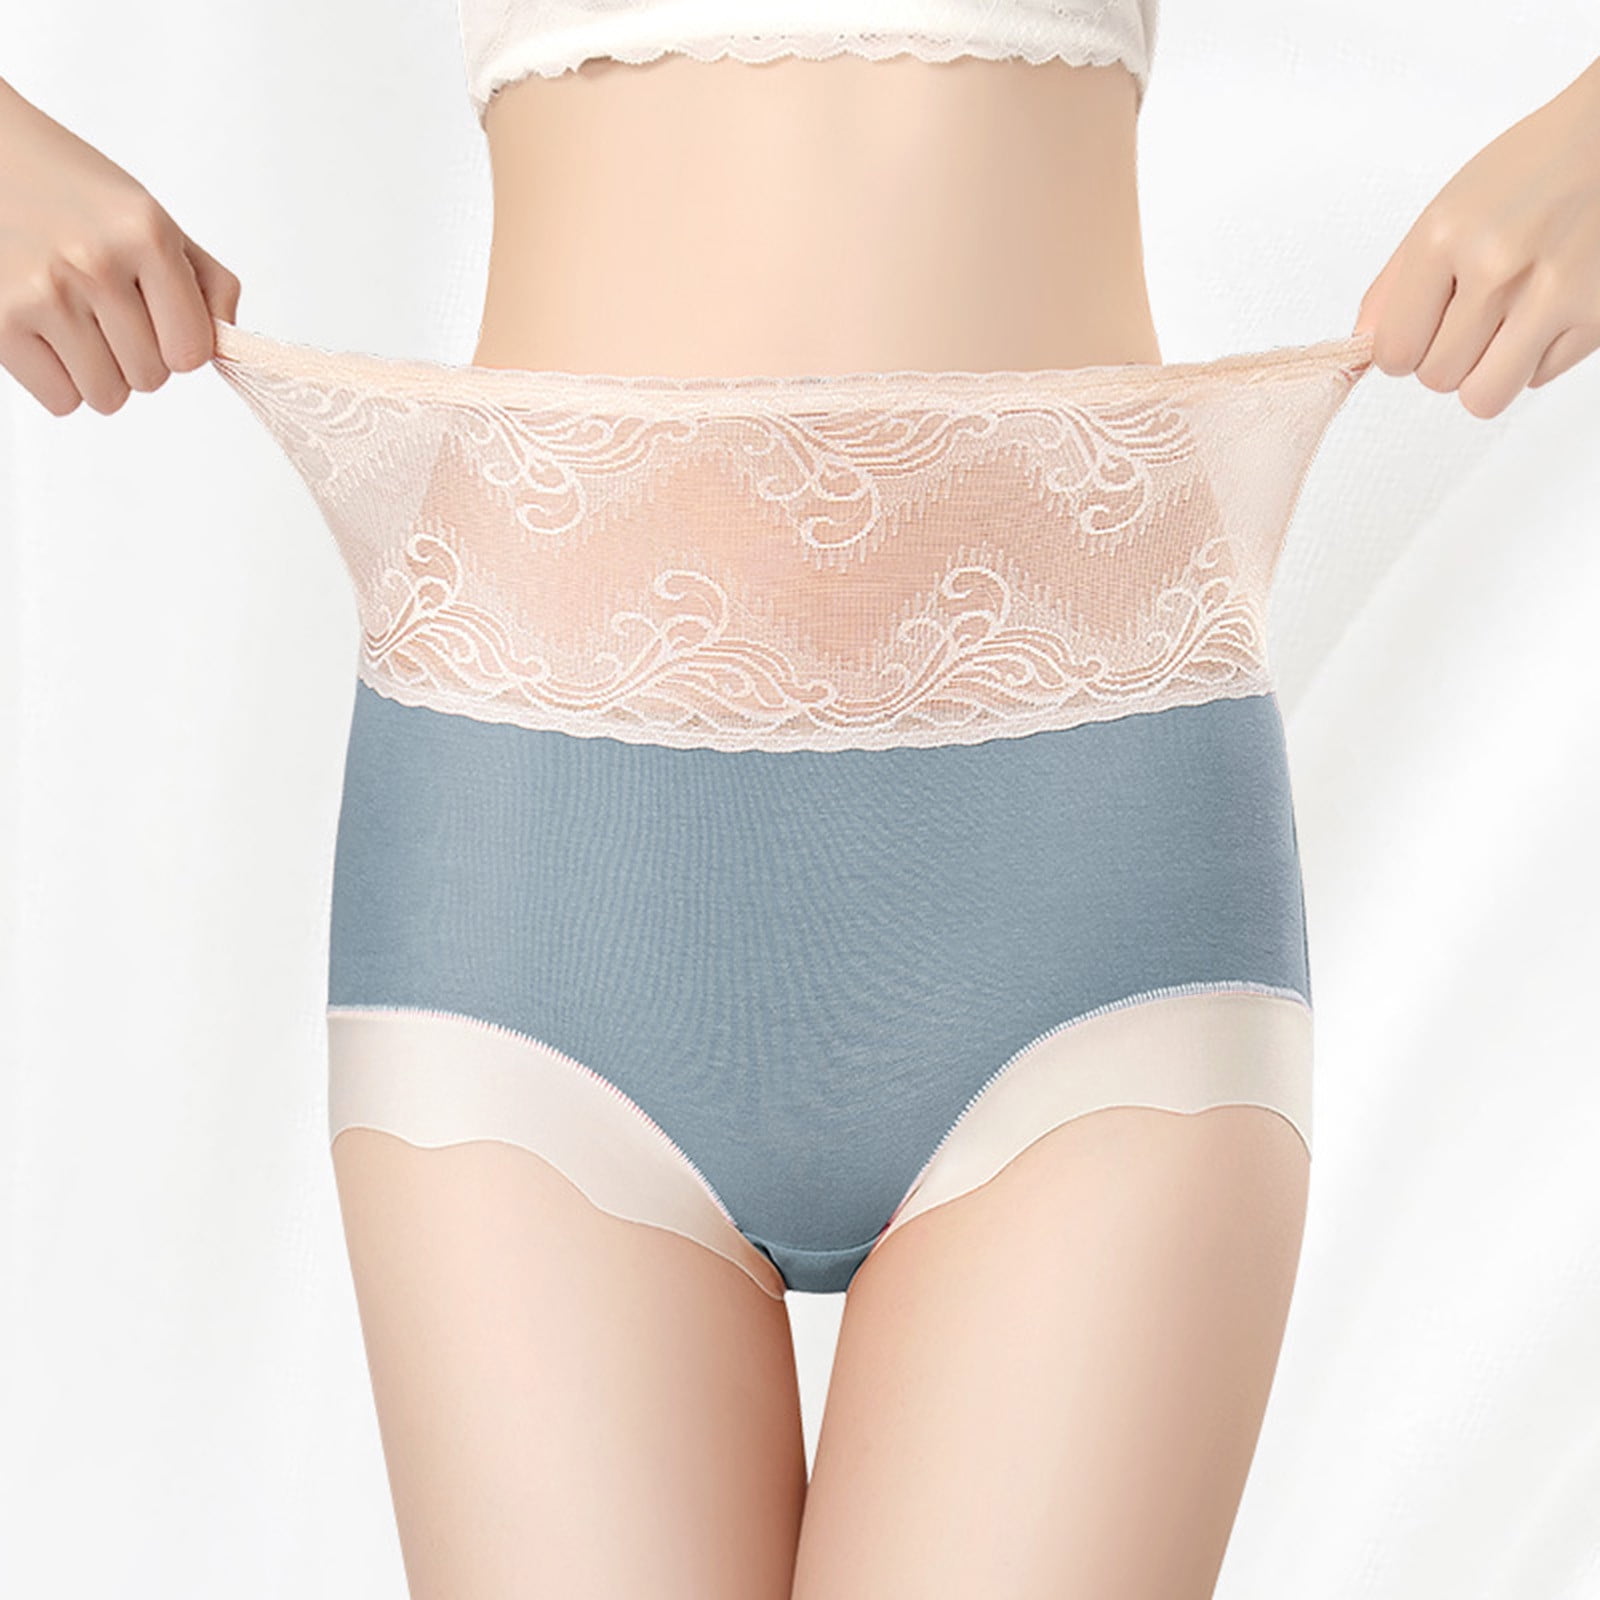 Gubotare Boxer Briefs For Women Out Underwear Panties Lace Crochet Lace Up  For Women Panty Hollow,D XL 